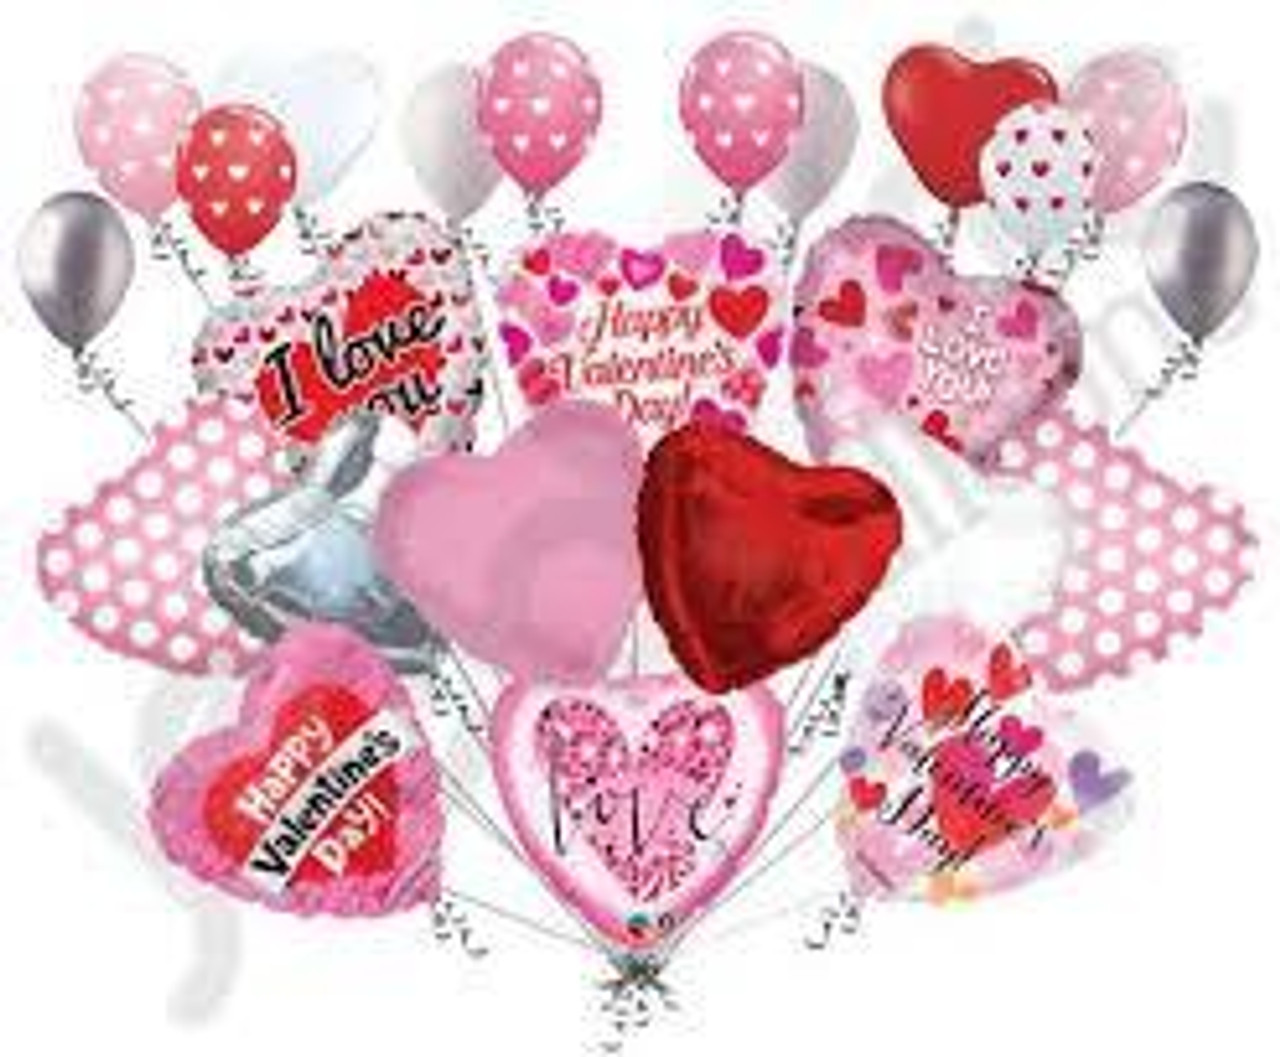 Large range of Helium filled Single Valentine Foils from $12.95 (standard size)